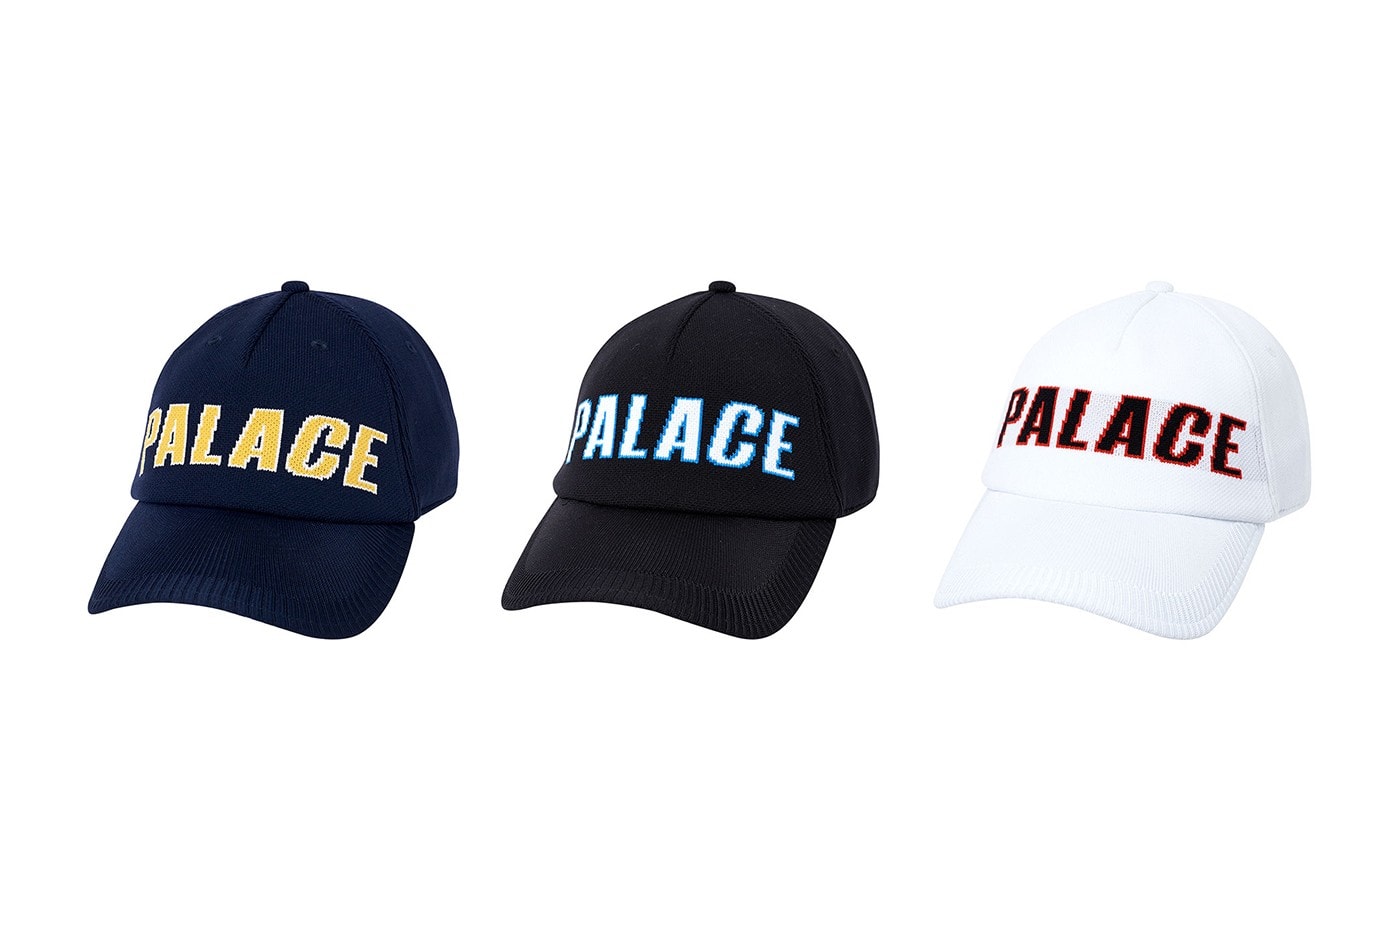 Palace 正式發佈 2019 秋季帽款系列